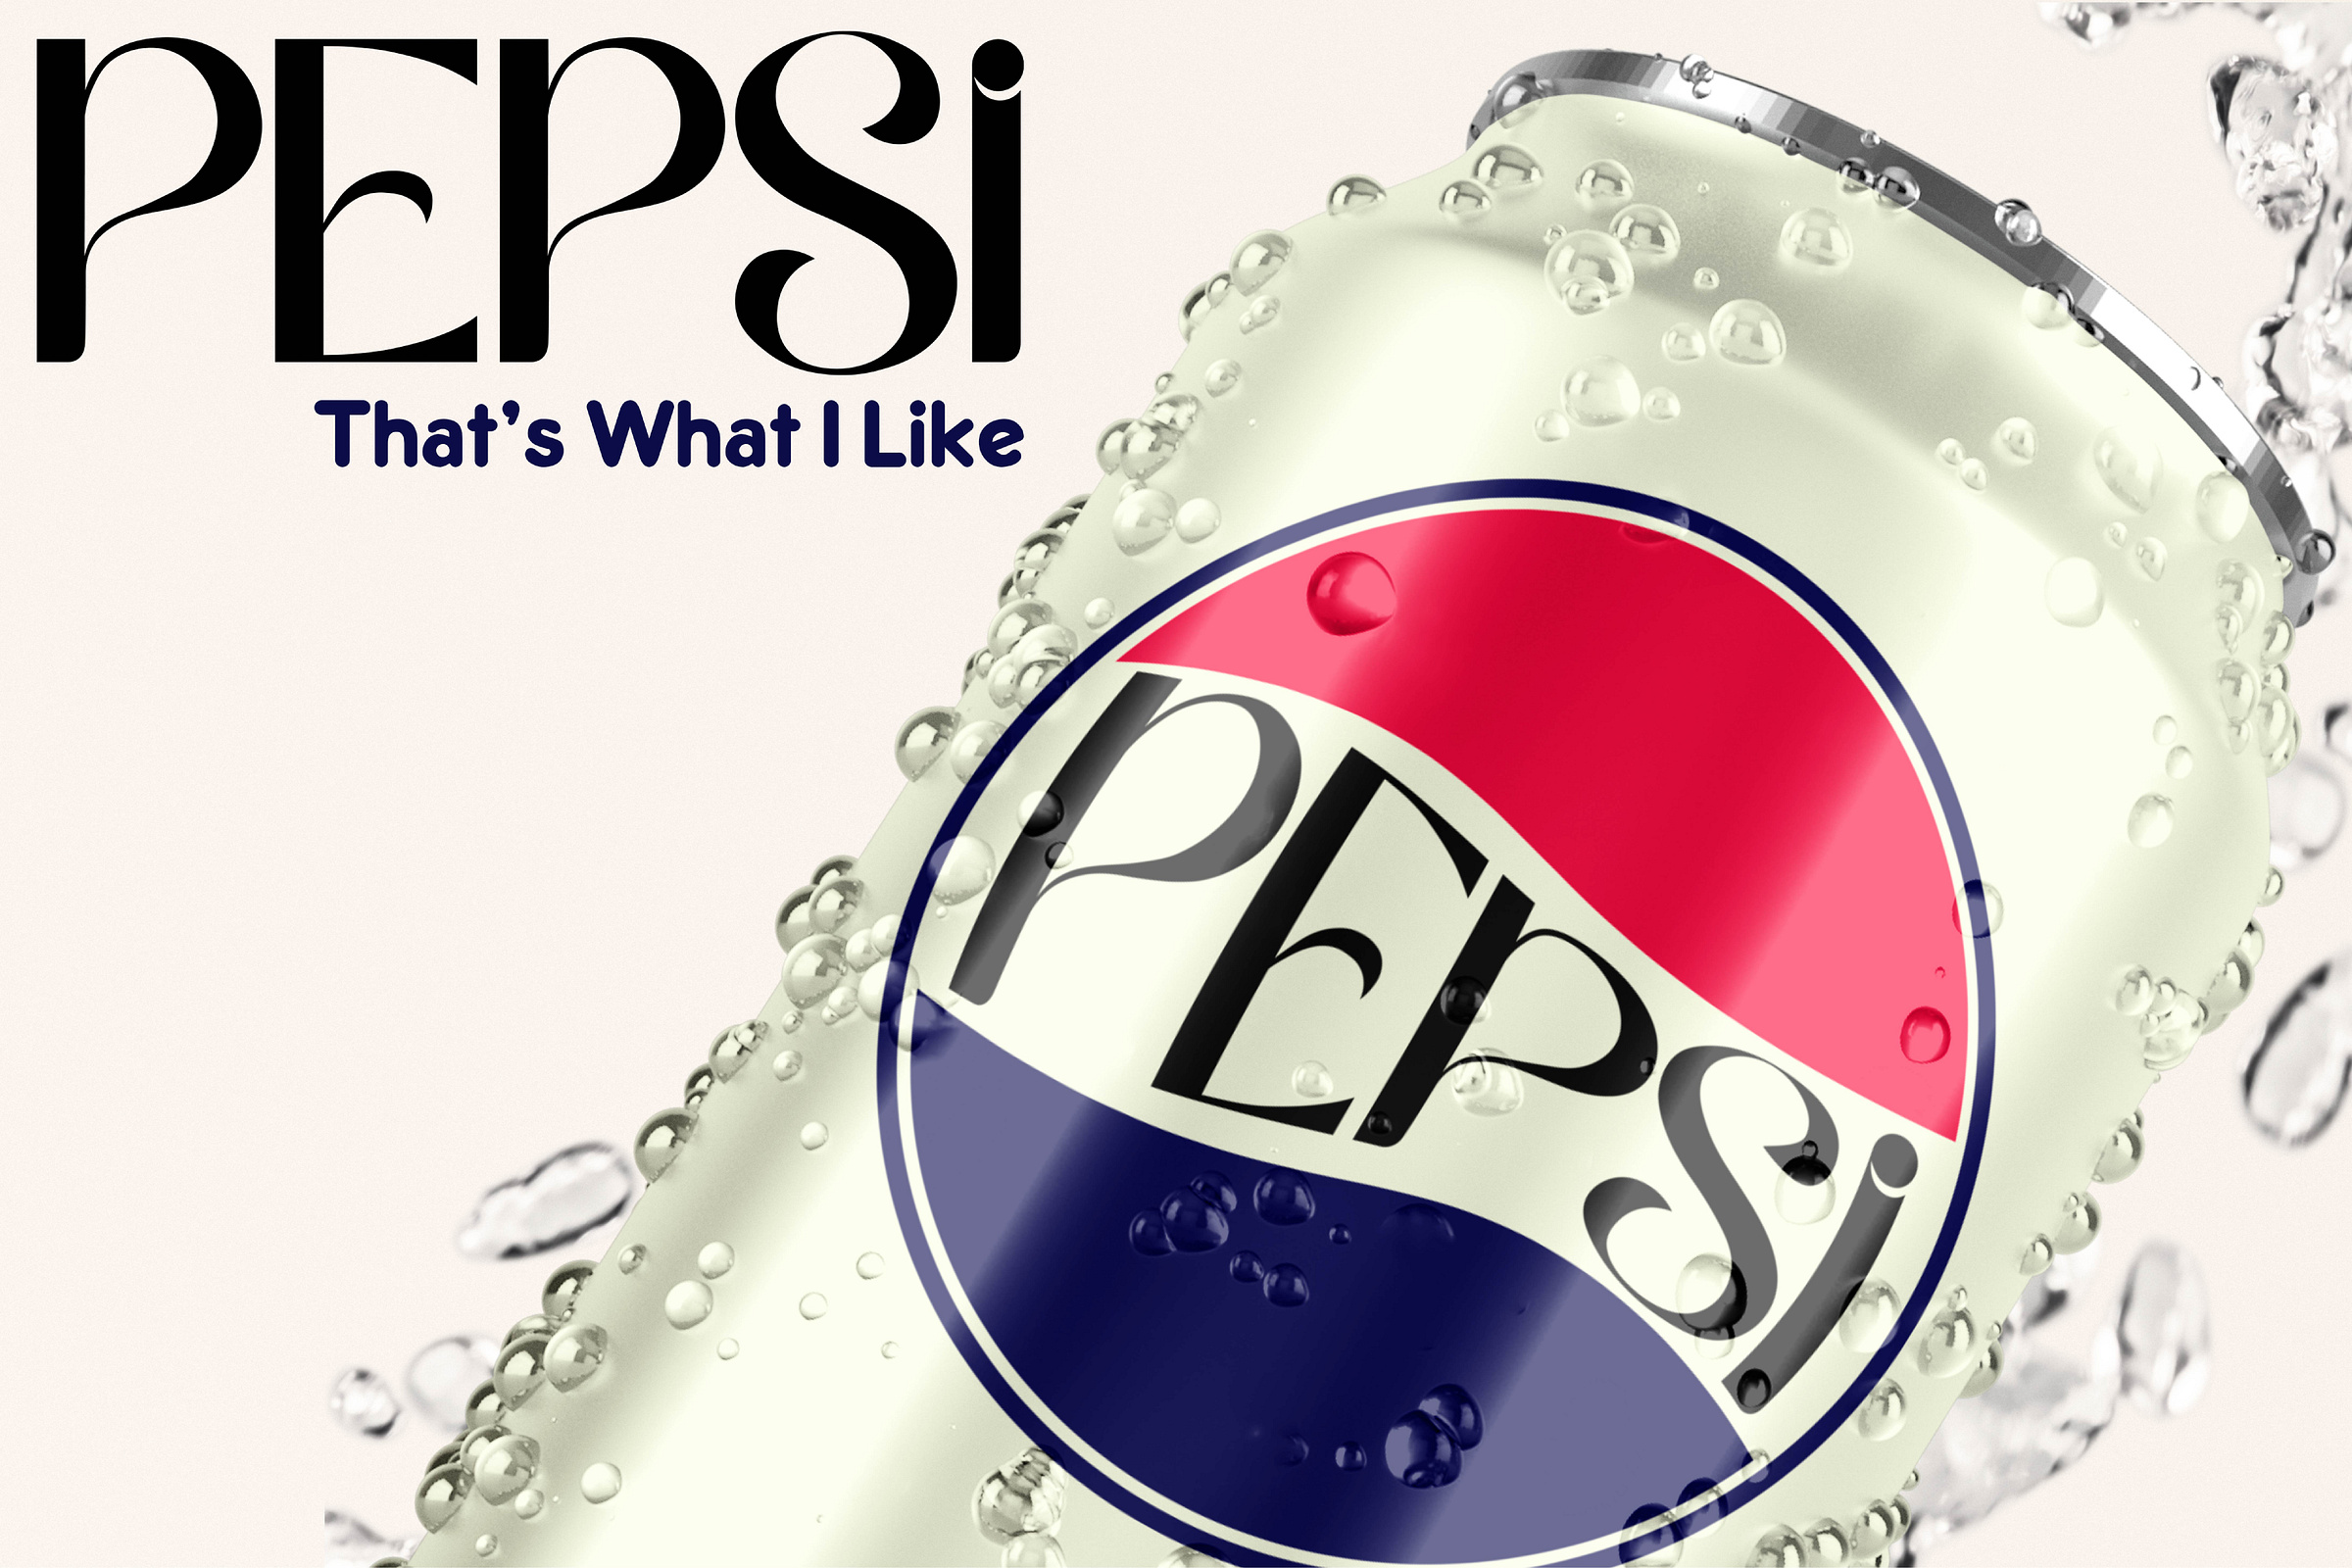 Pepsi rebrand by Shera Mwora on Dribbble